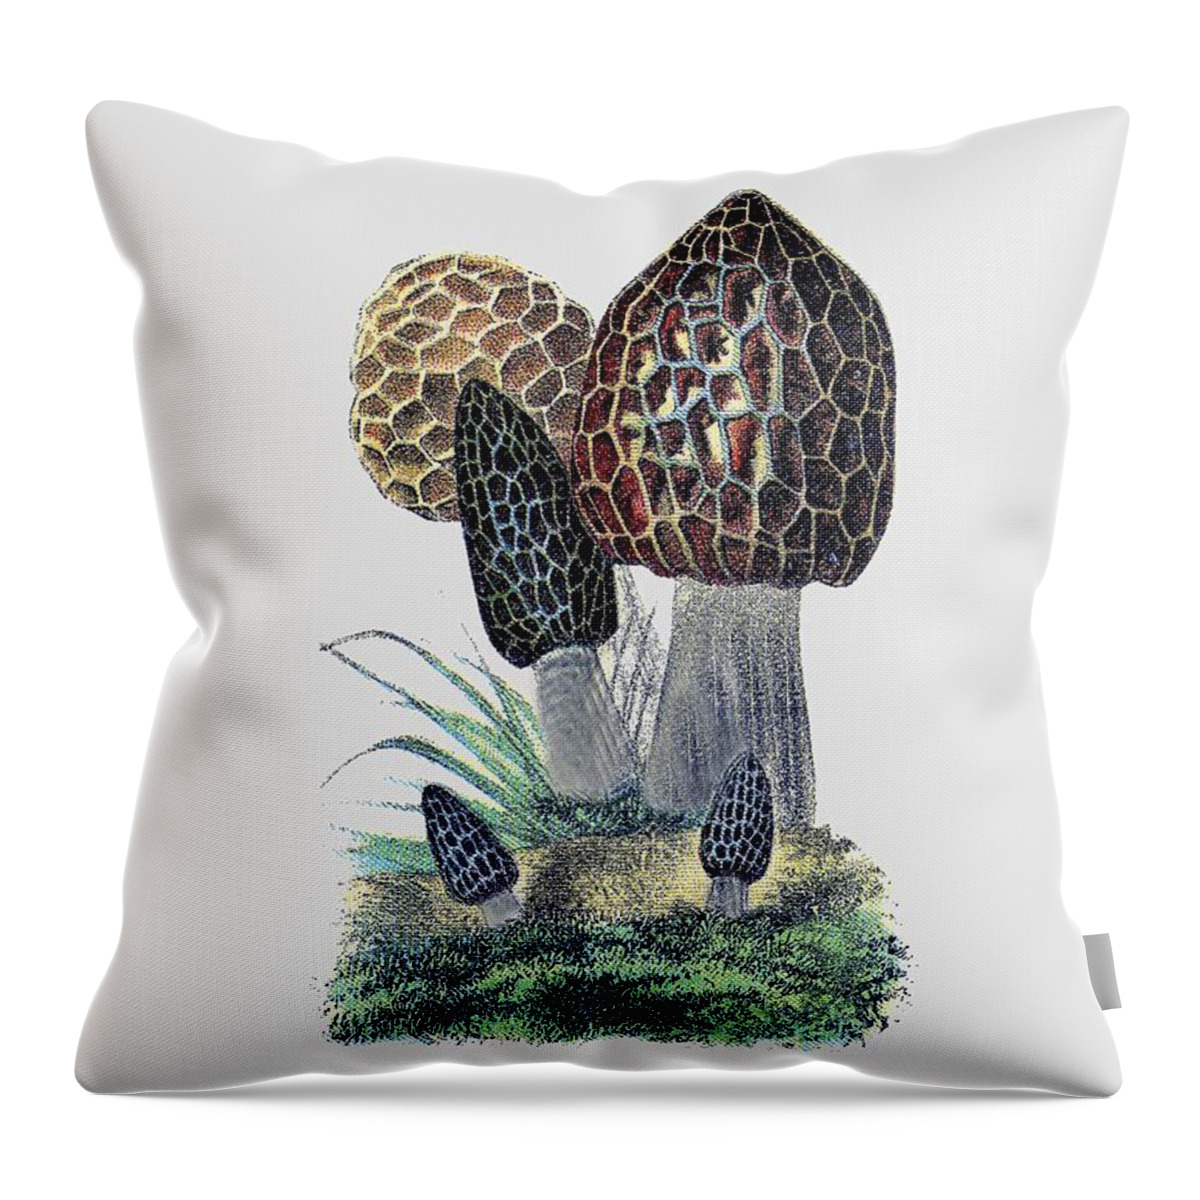 Bellesouth Studio Throw Pillow featuring the digital art Mushrooms T Shirt by Bellesouth Studio